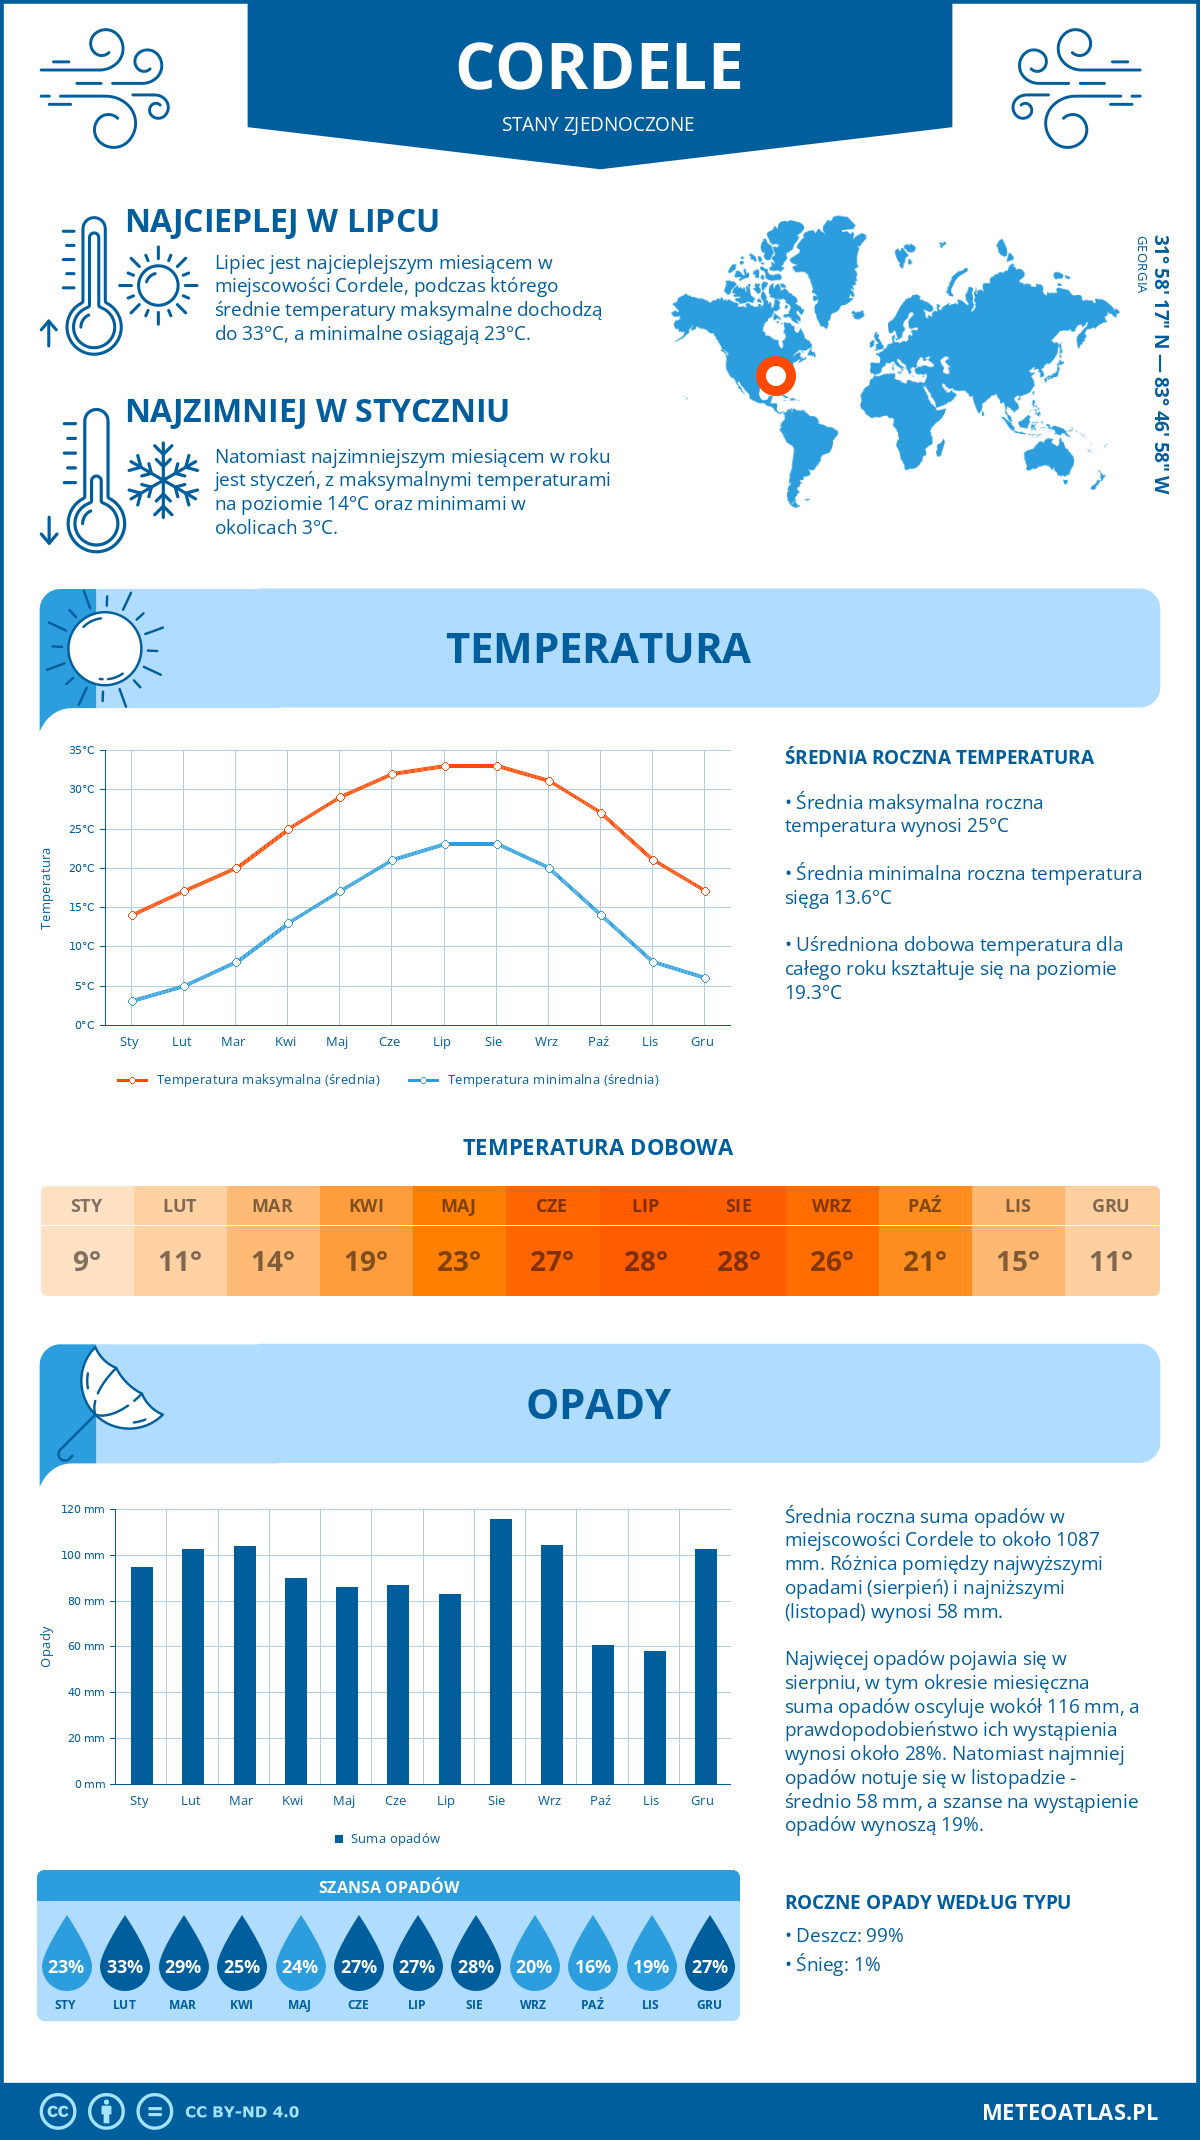 Pogoda Cordele (Stany Zjednoczone). Temperatura oraz opady.